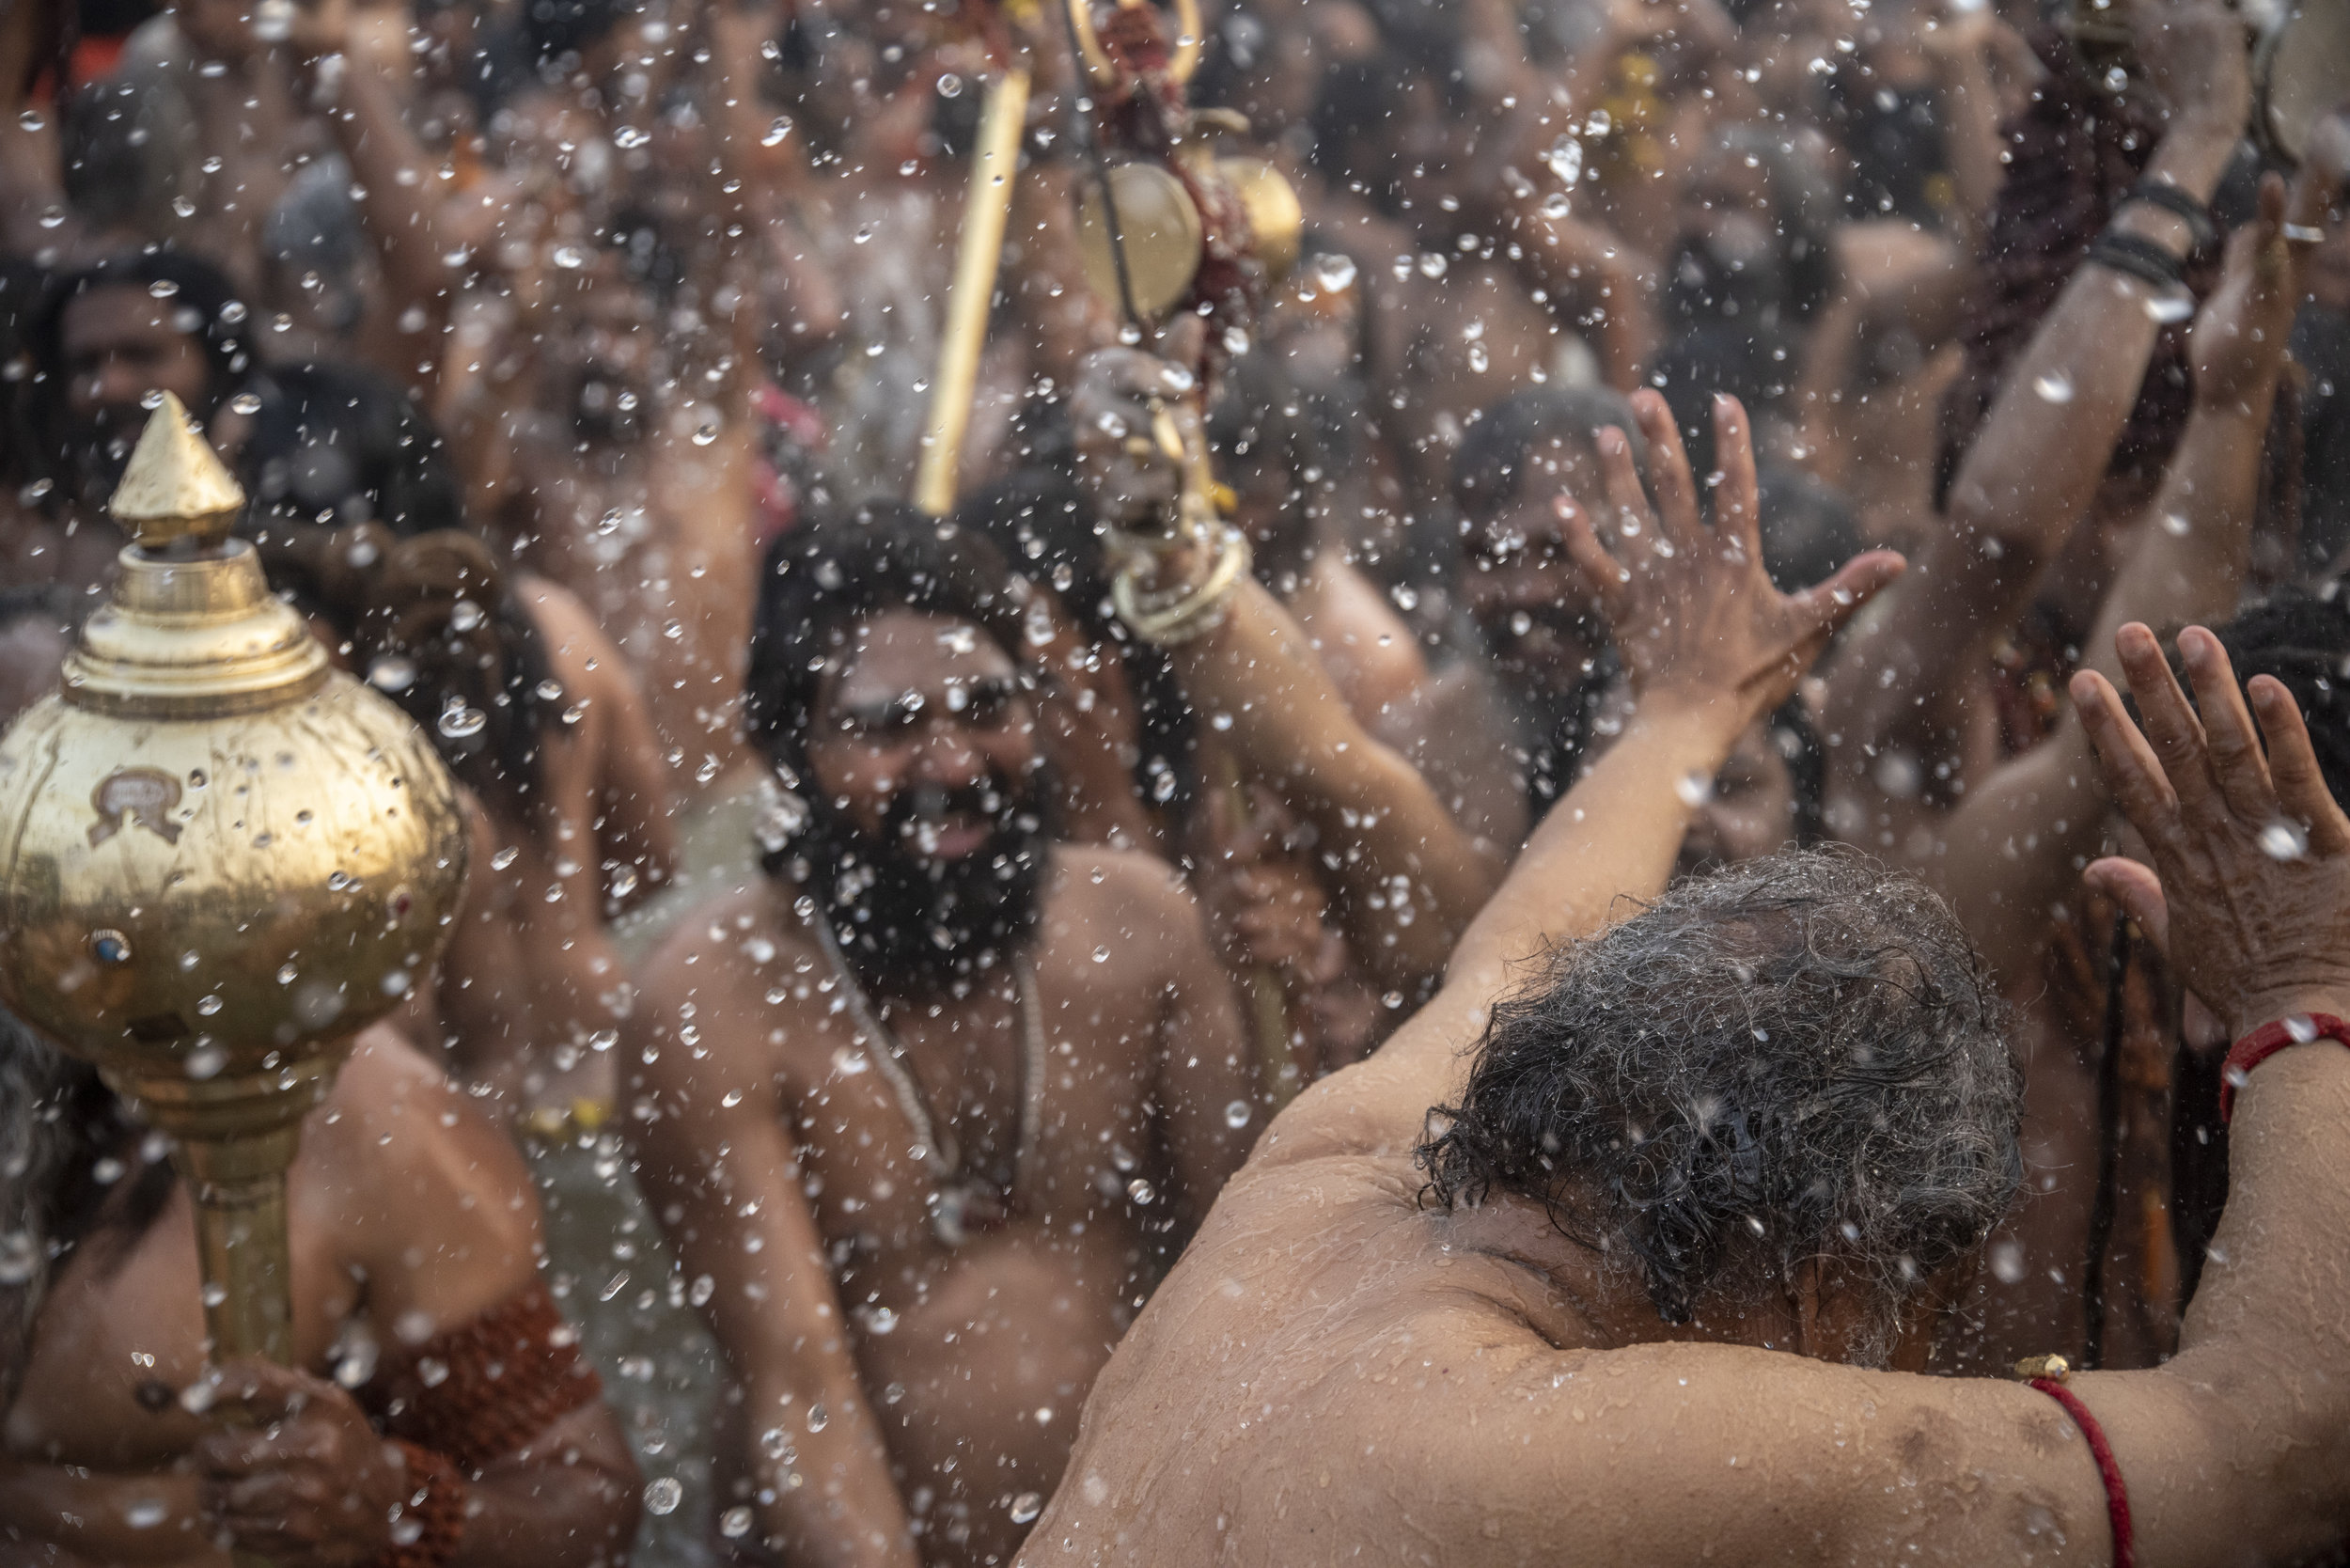  A frenzy of  Naga Sadhu’s celebrate Shahi Snan at Sangam, the confluence of three holy rivers.  